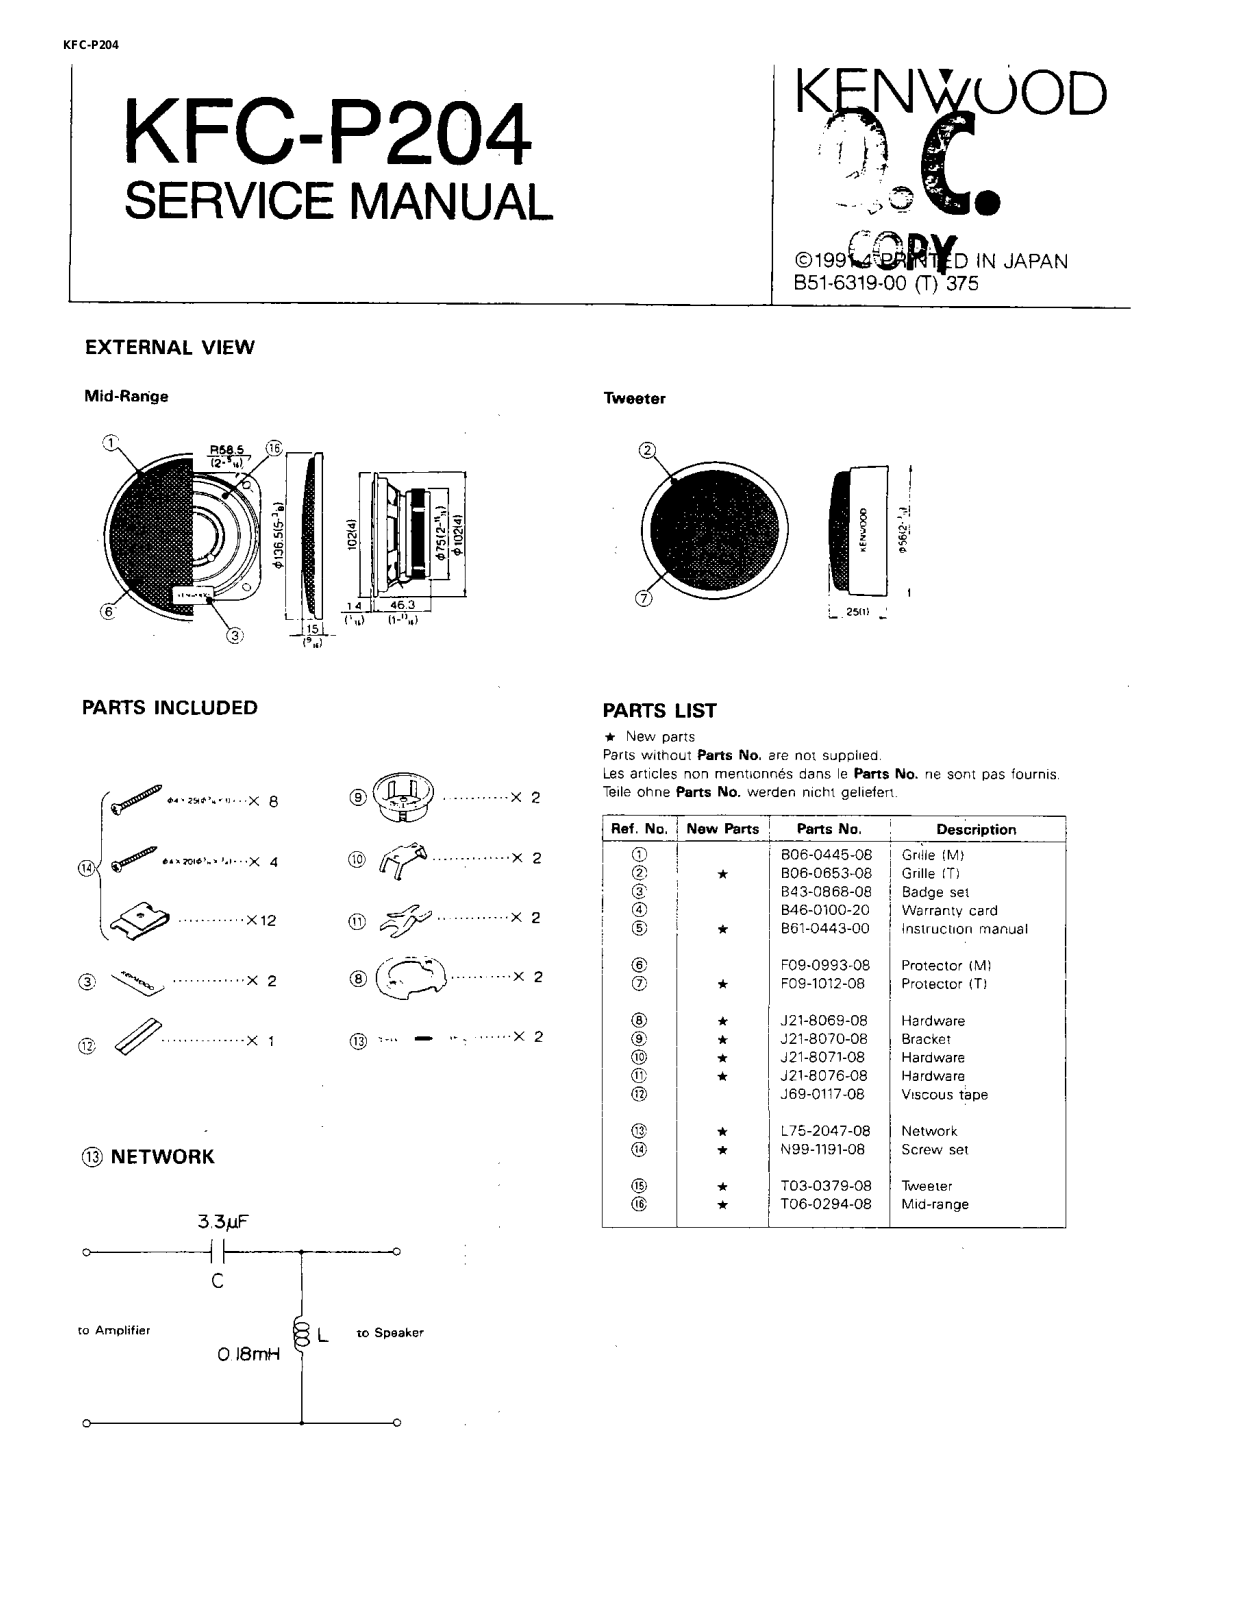 Kenwood KFC-P204 Service Manual